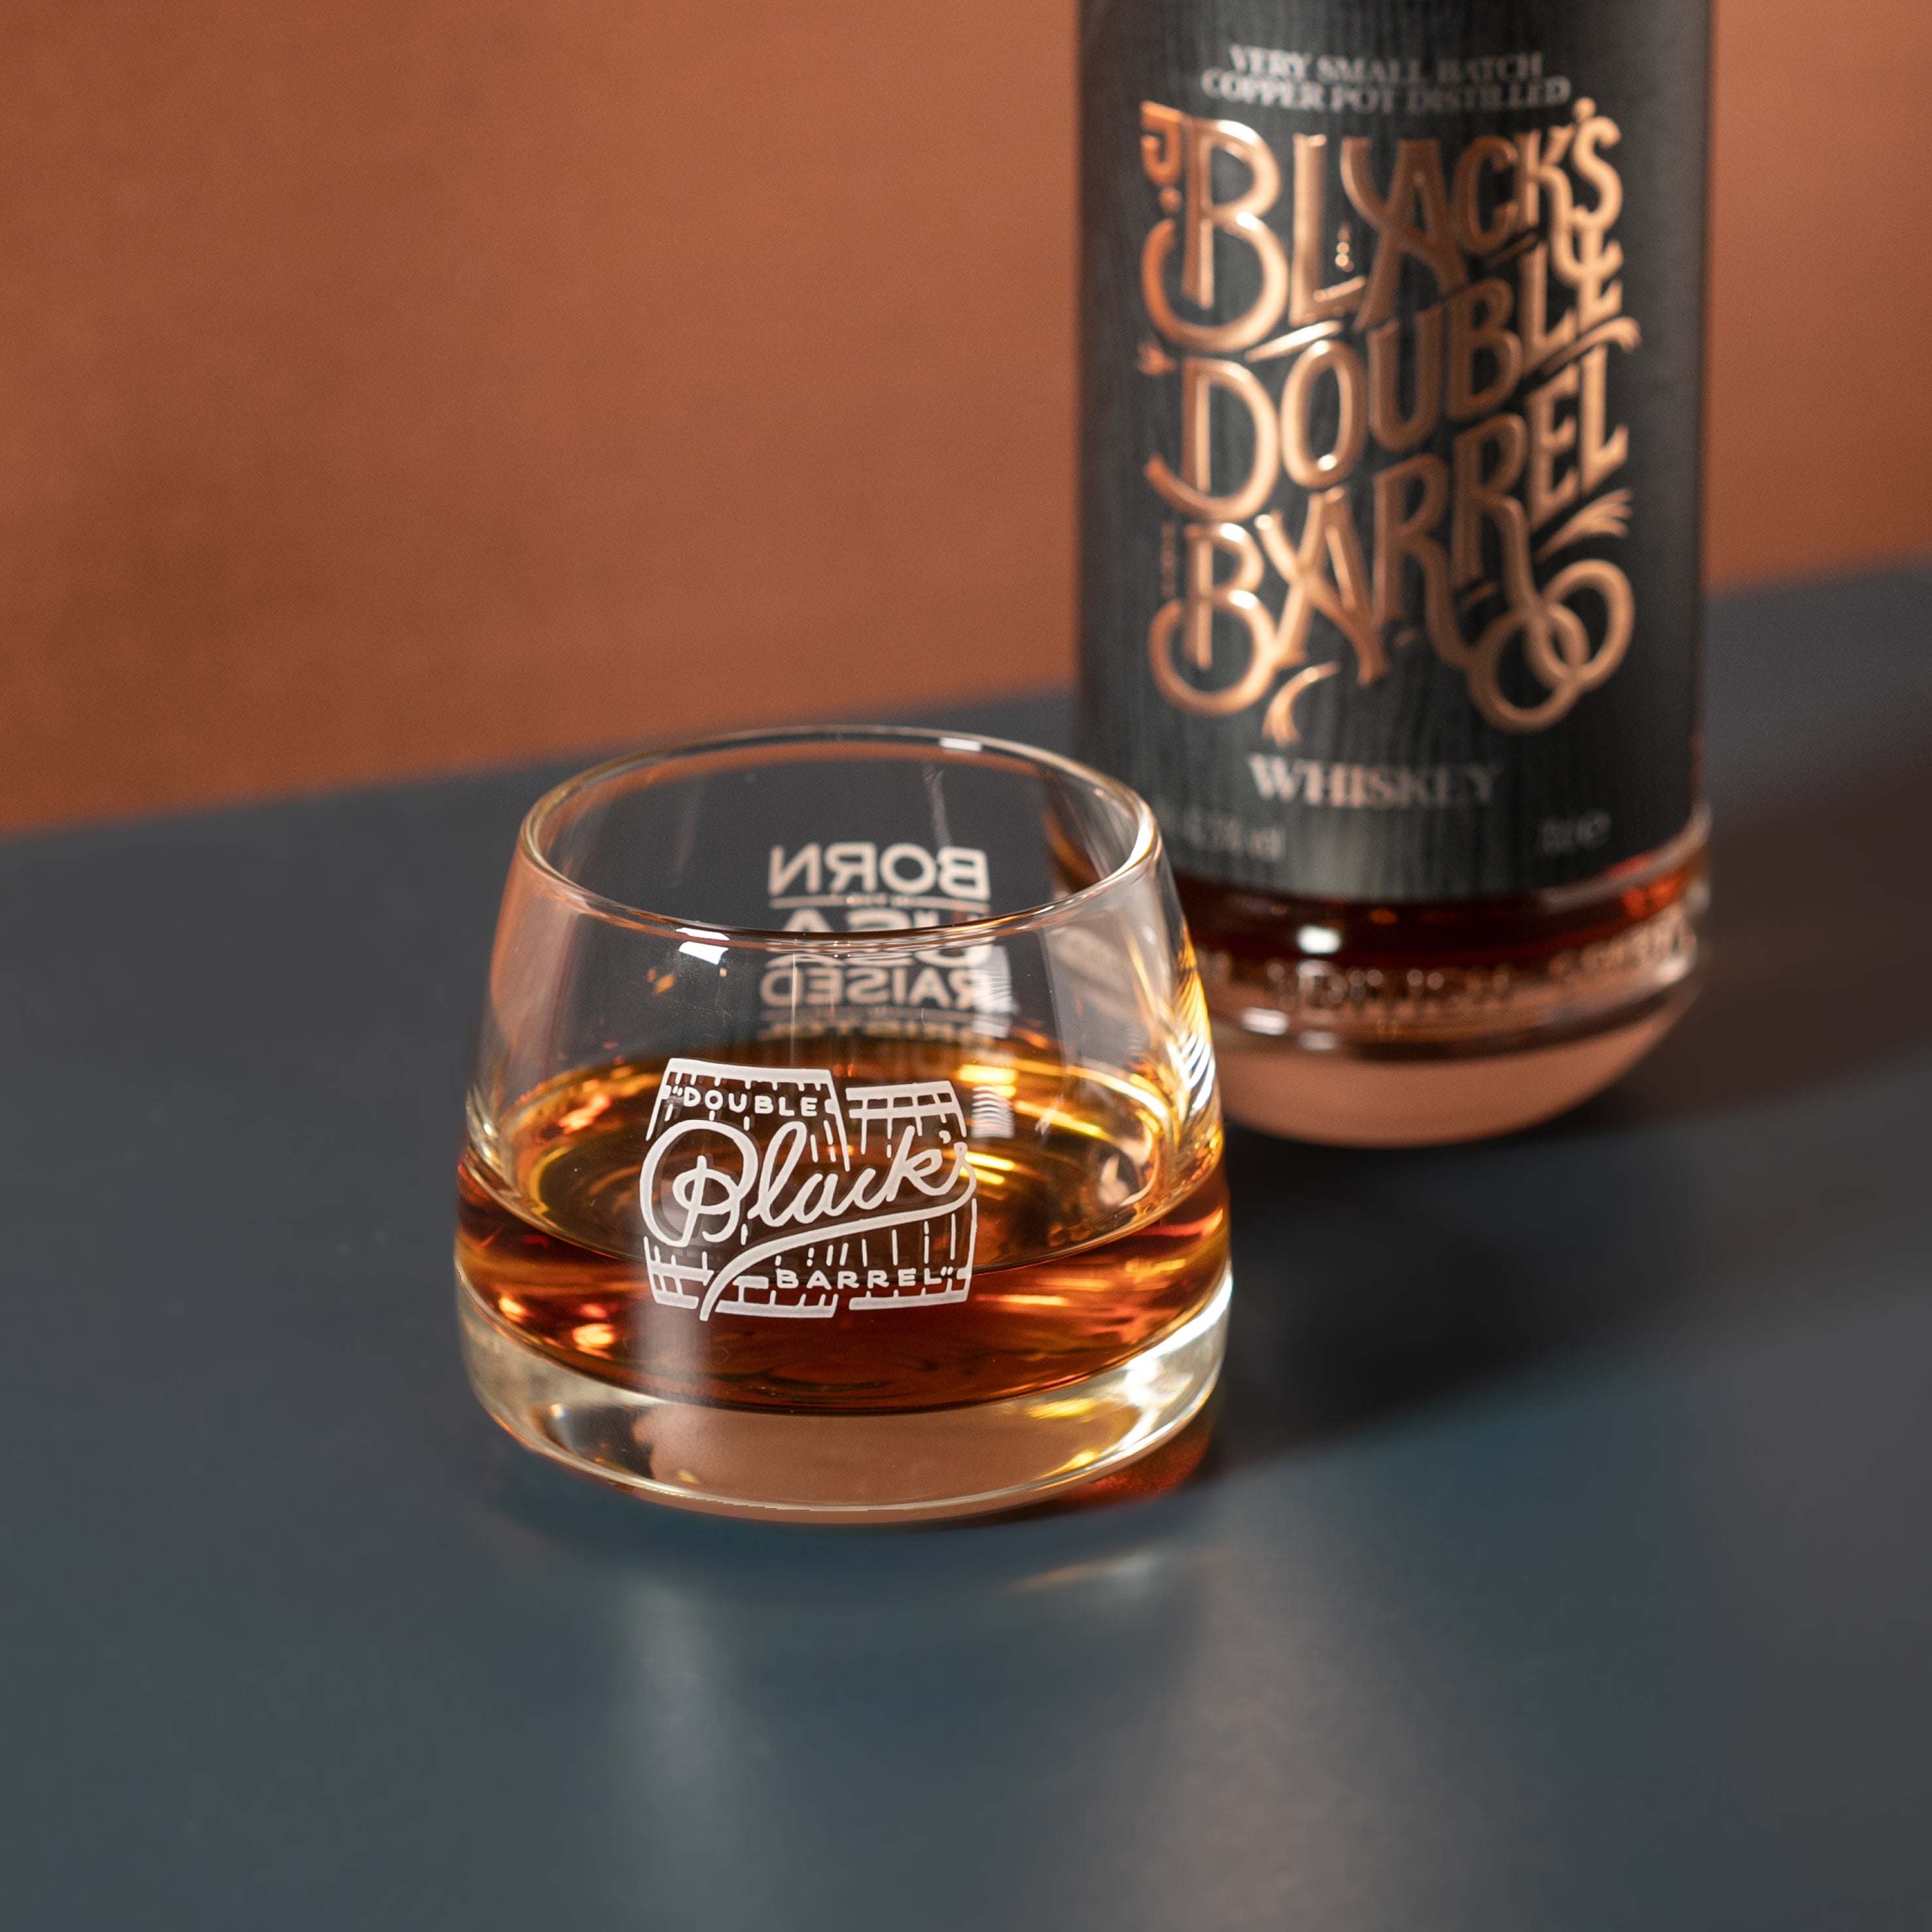 J. Black' Double Barrel Whiskey # Batch 1 Limited Release 70cl Bottle